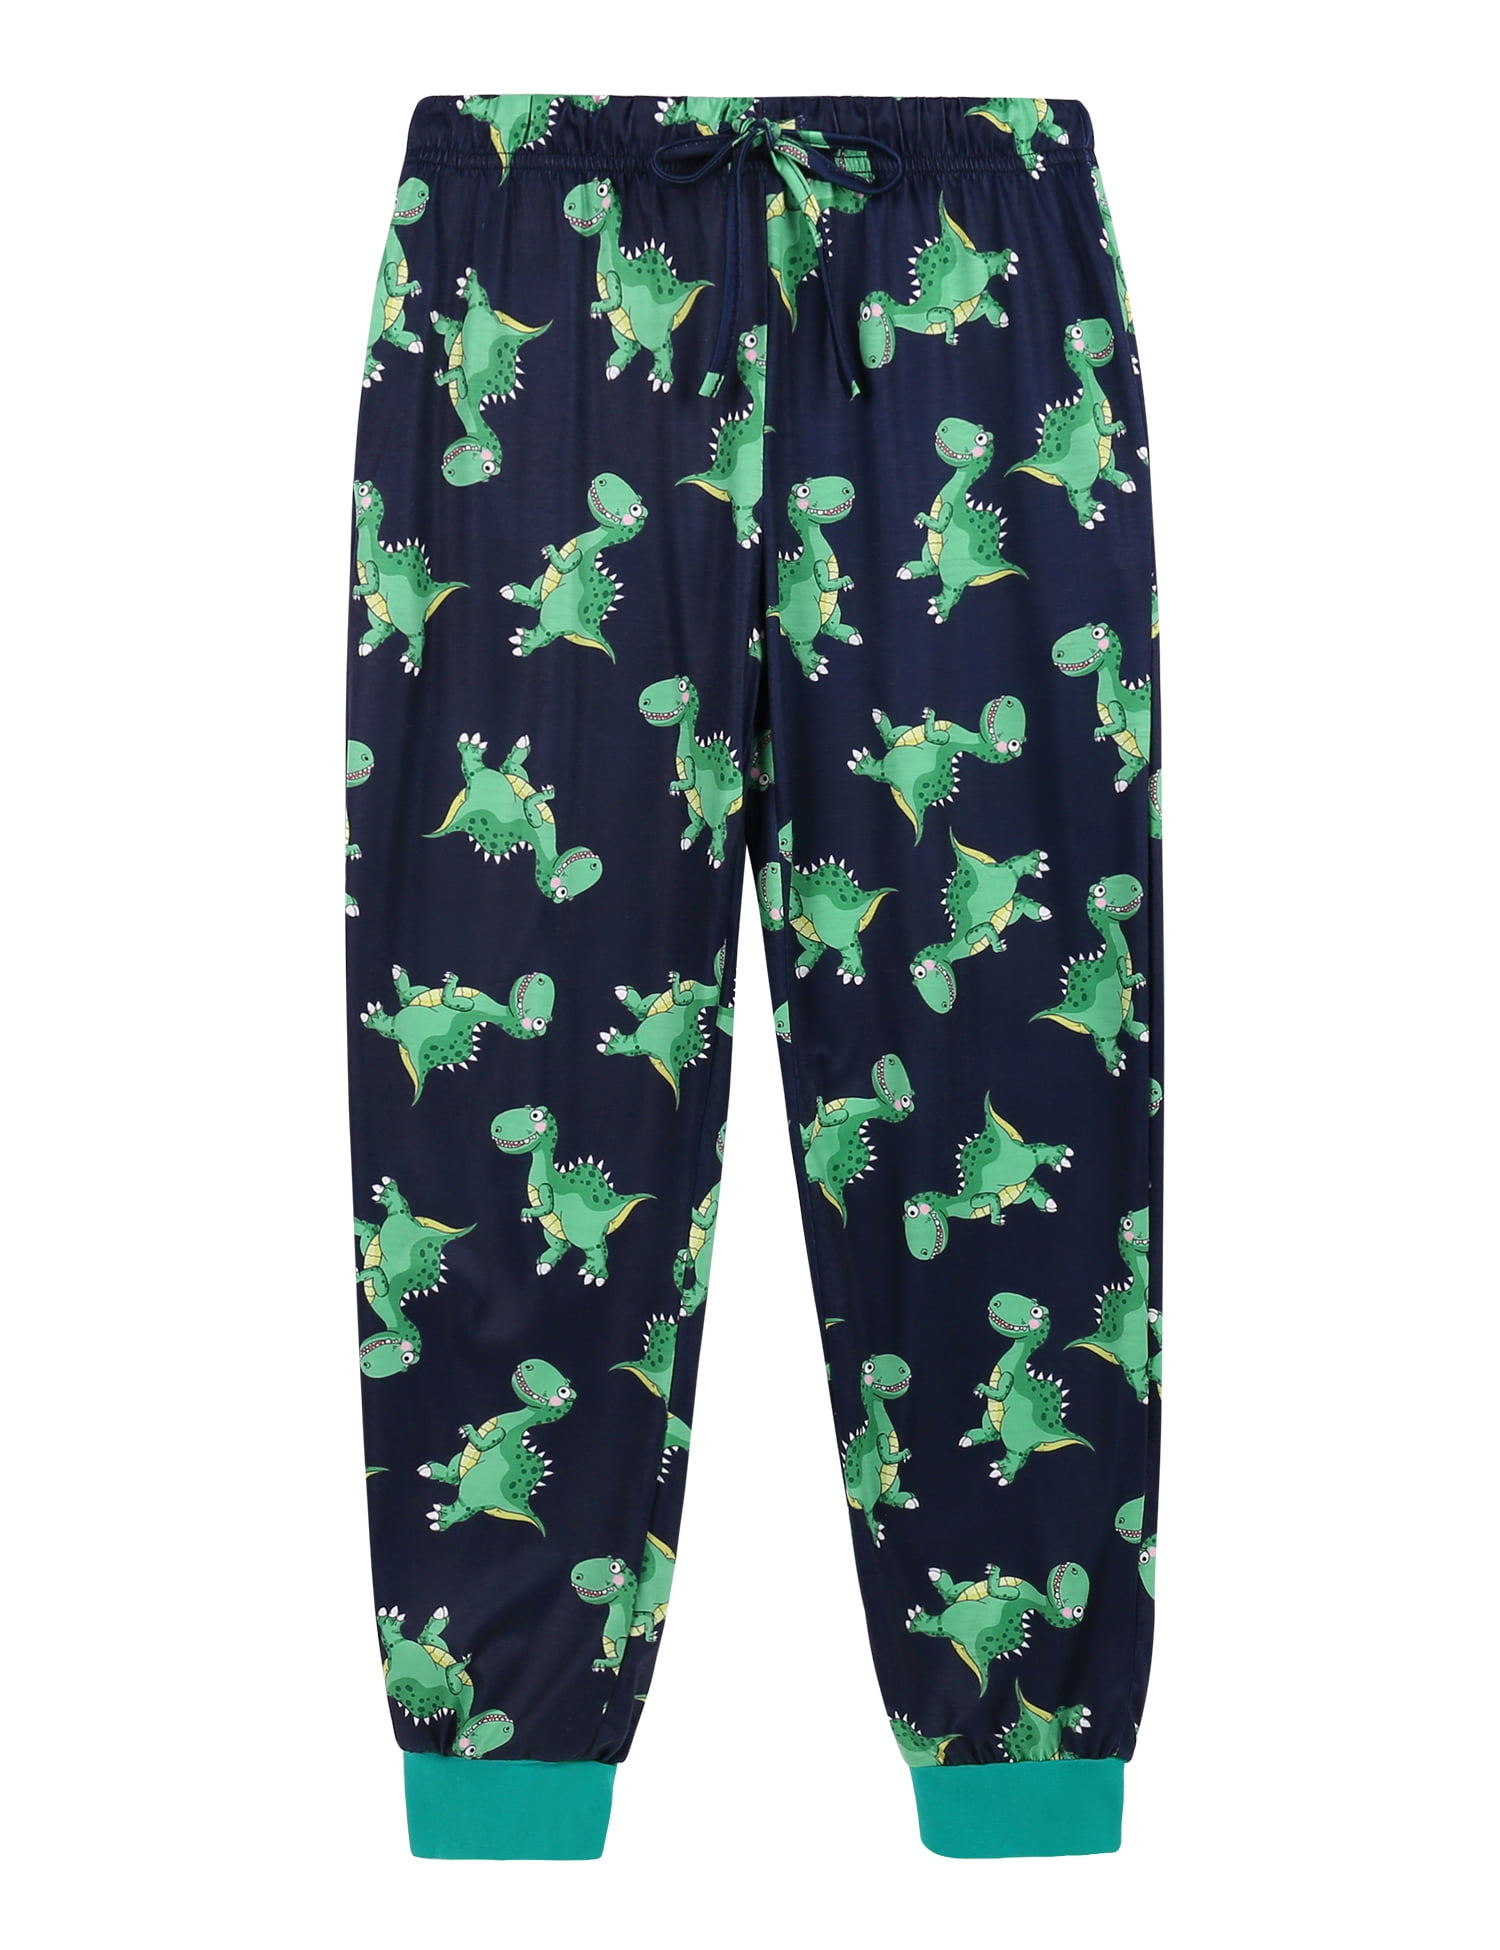 Uniexcosm Boys Pajama Pants Boy Pjs Pants Sleepwear Bottoms for Age 4 ...